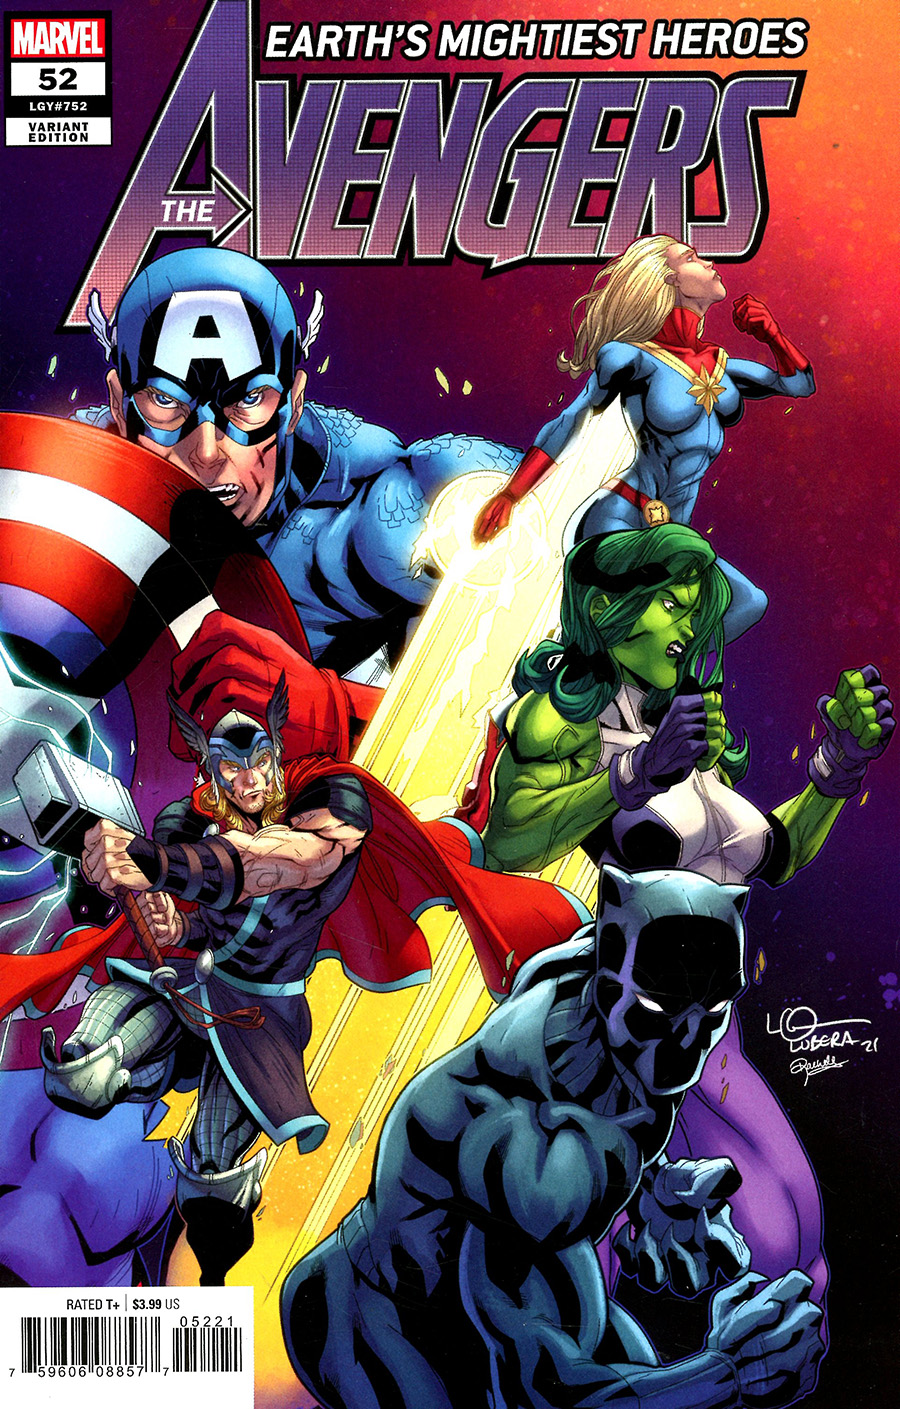 Avengers Vol 7 #52 Cover B Variant Logan Lubera Cover